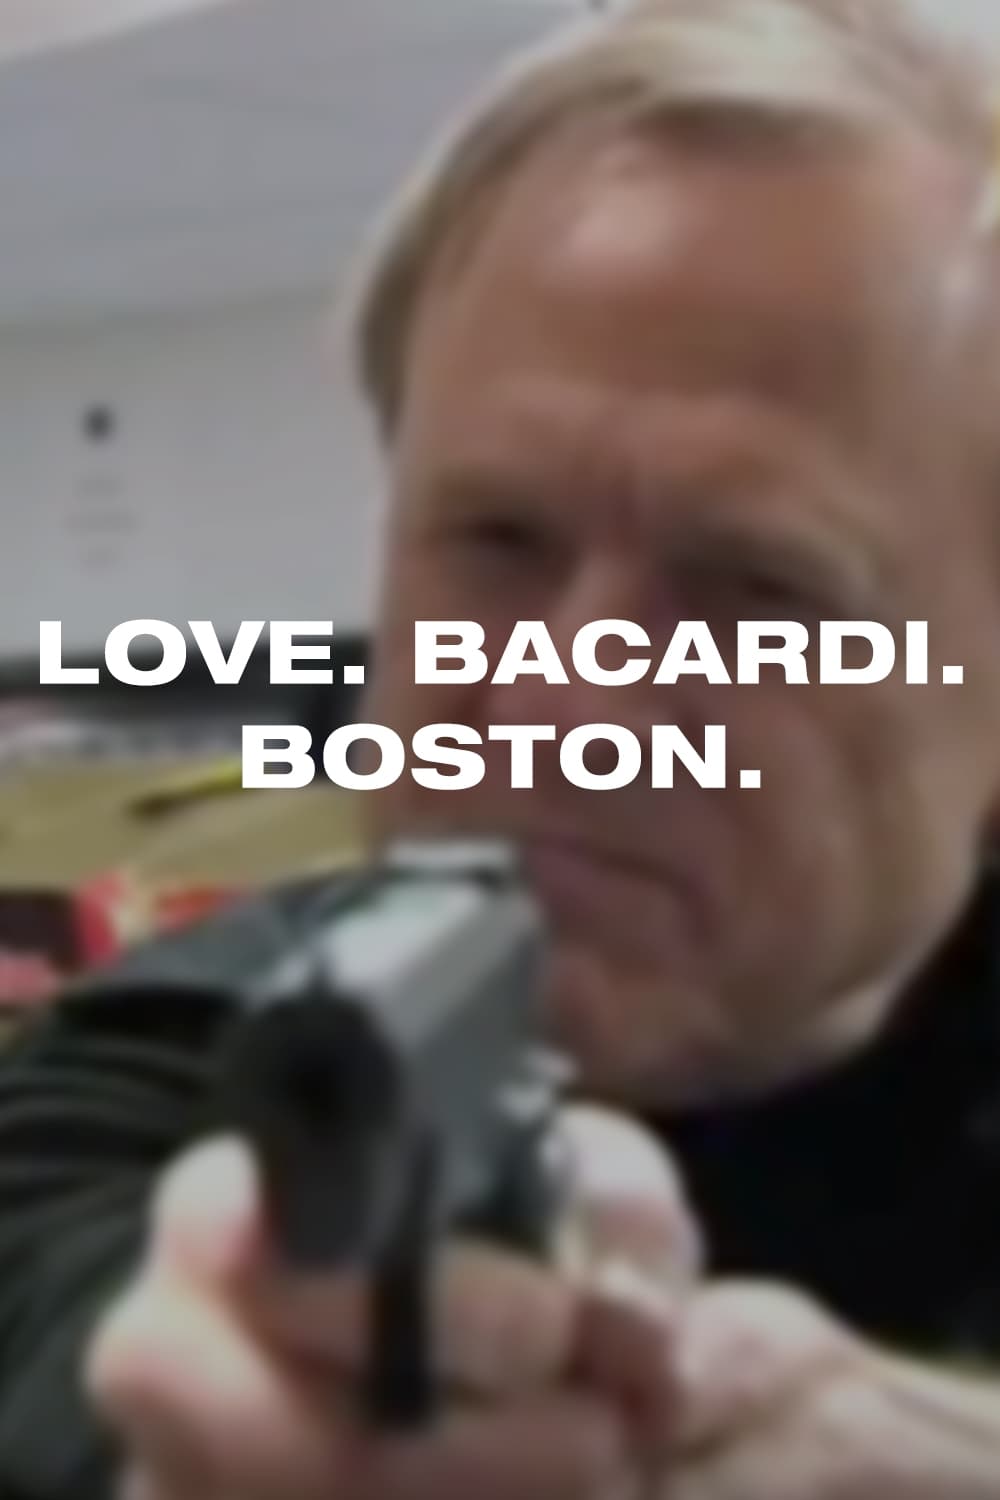 Love. Bacardi. Boston.